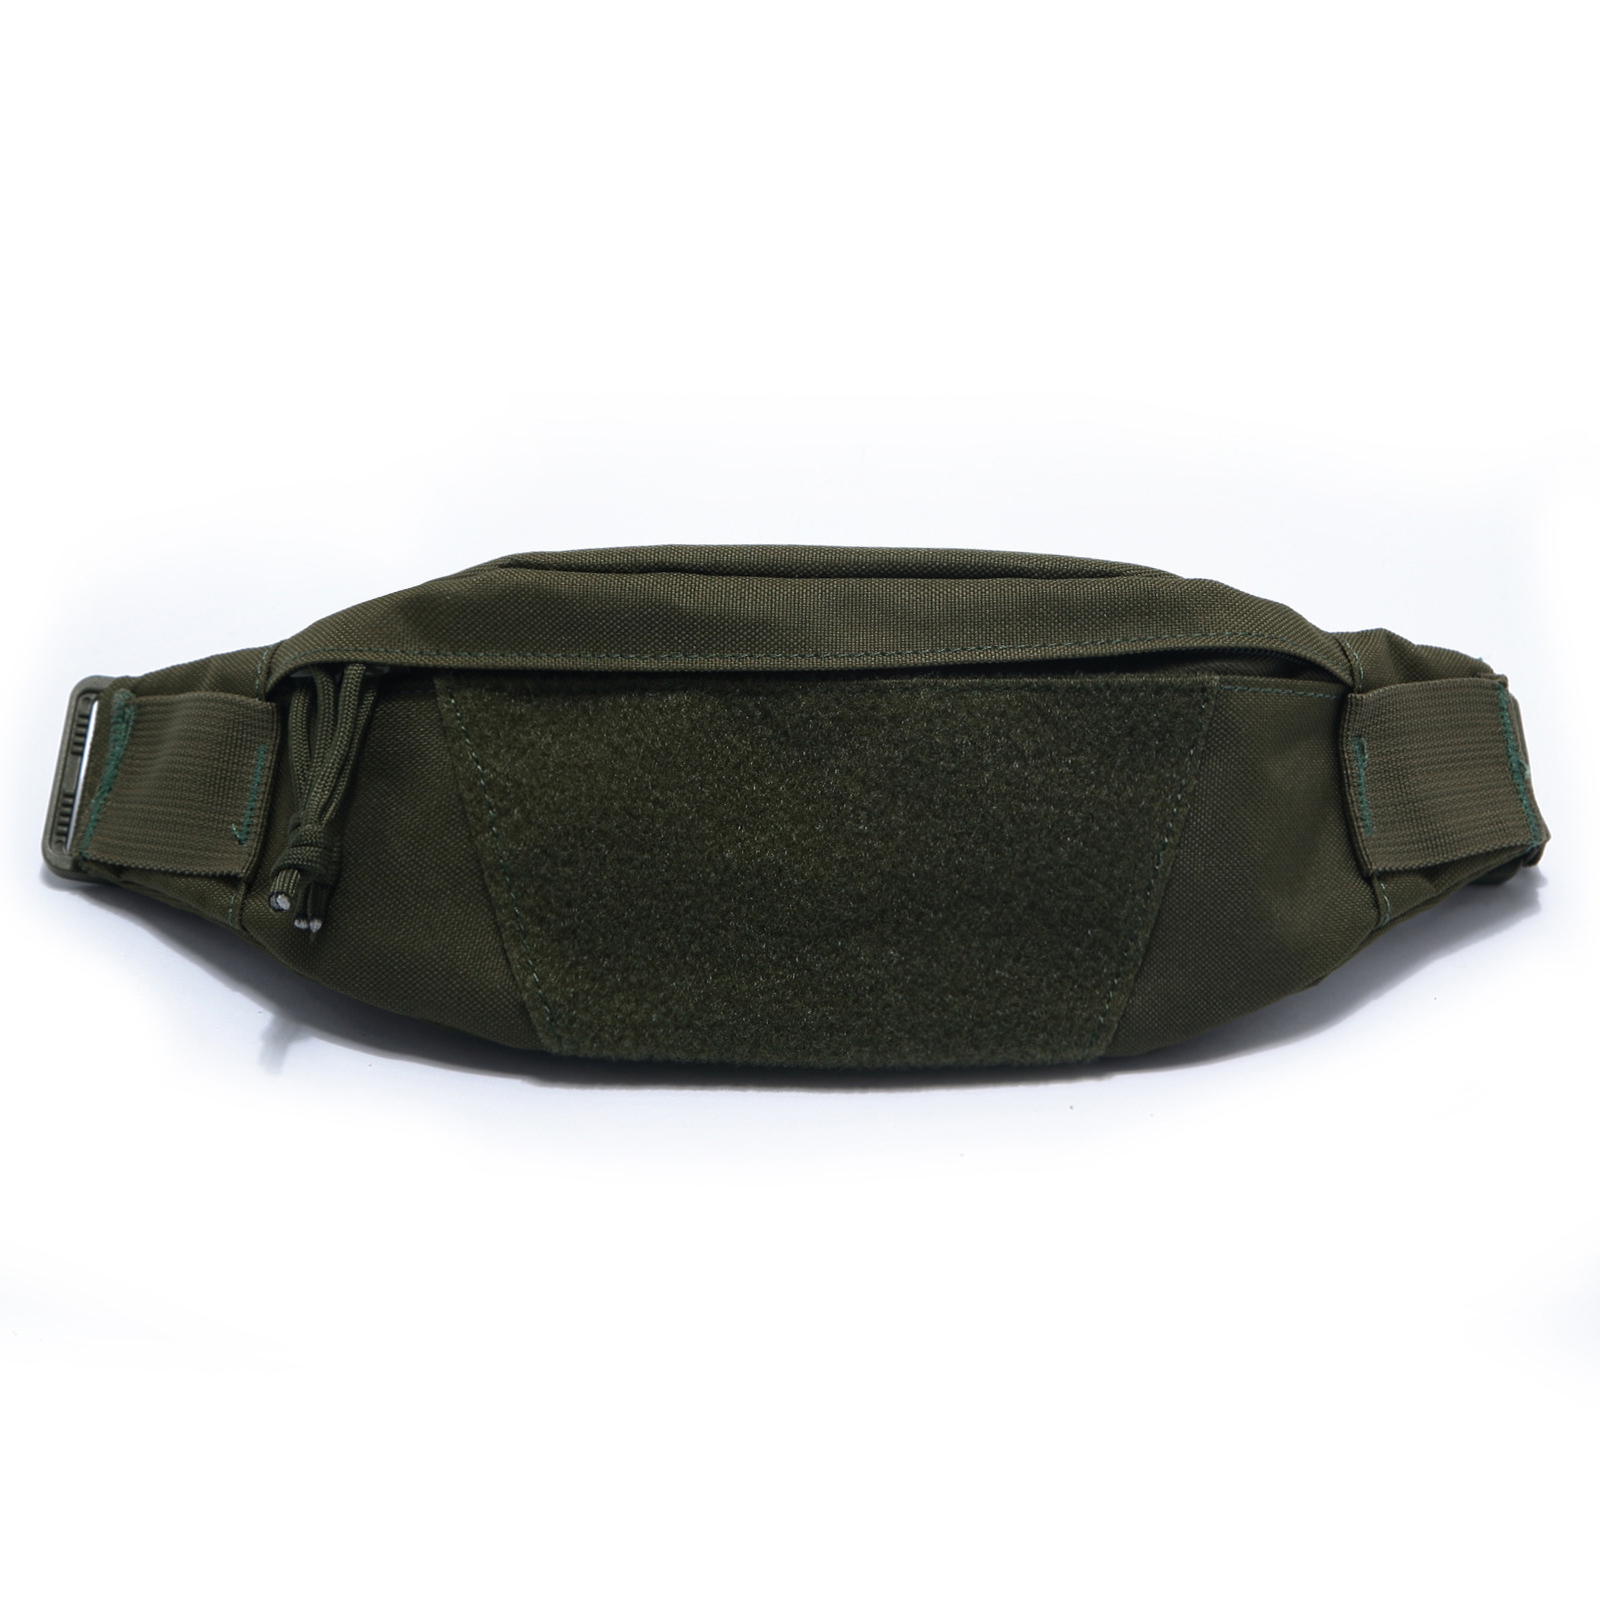 Camouflage-Tactical-Waist-Bag-Cross-Bag-Tactical-Waist-Bag-Outdoor-Fitness-Leisure-Bag-1568909-4